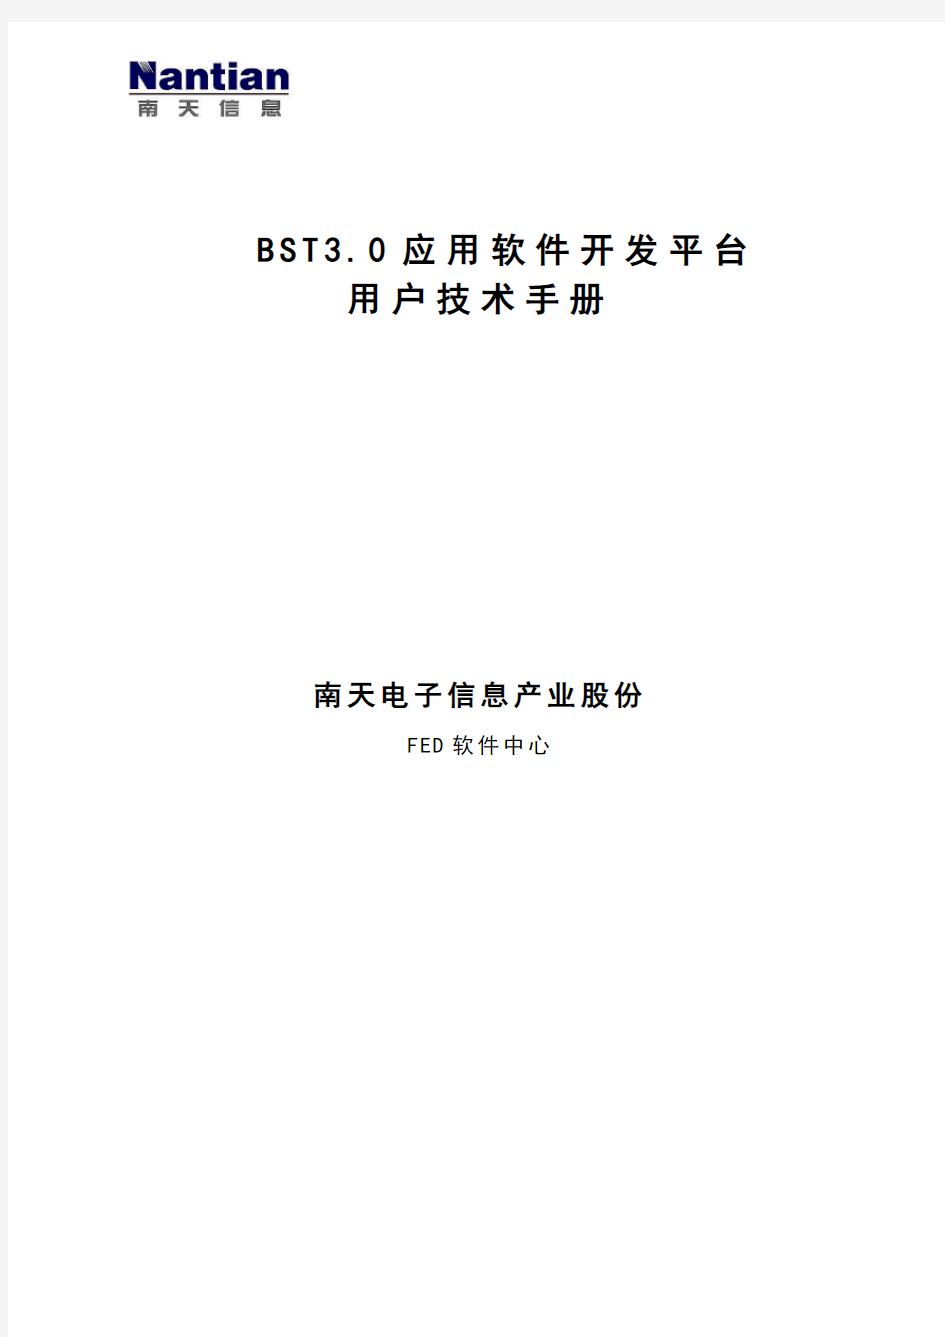 BST3.0应用软件开发平台技术手册范本